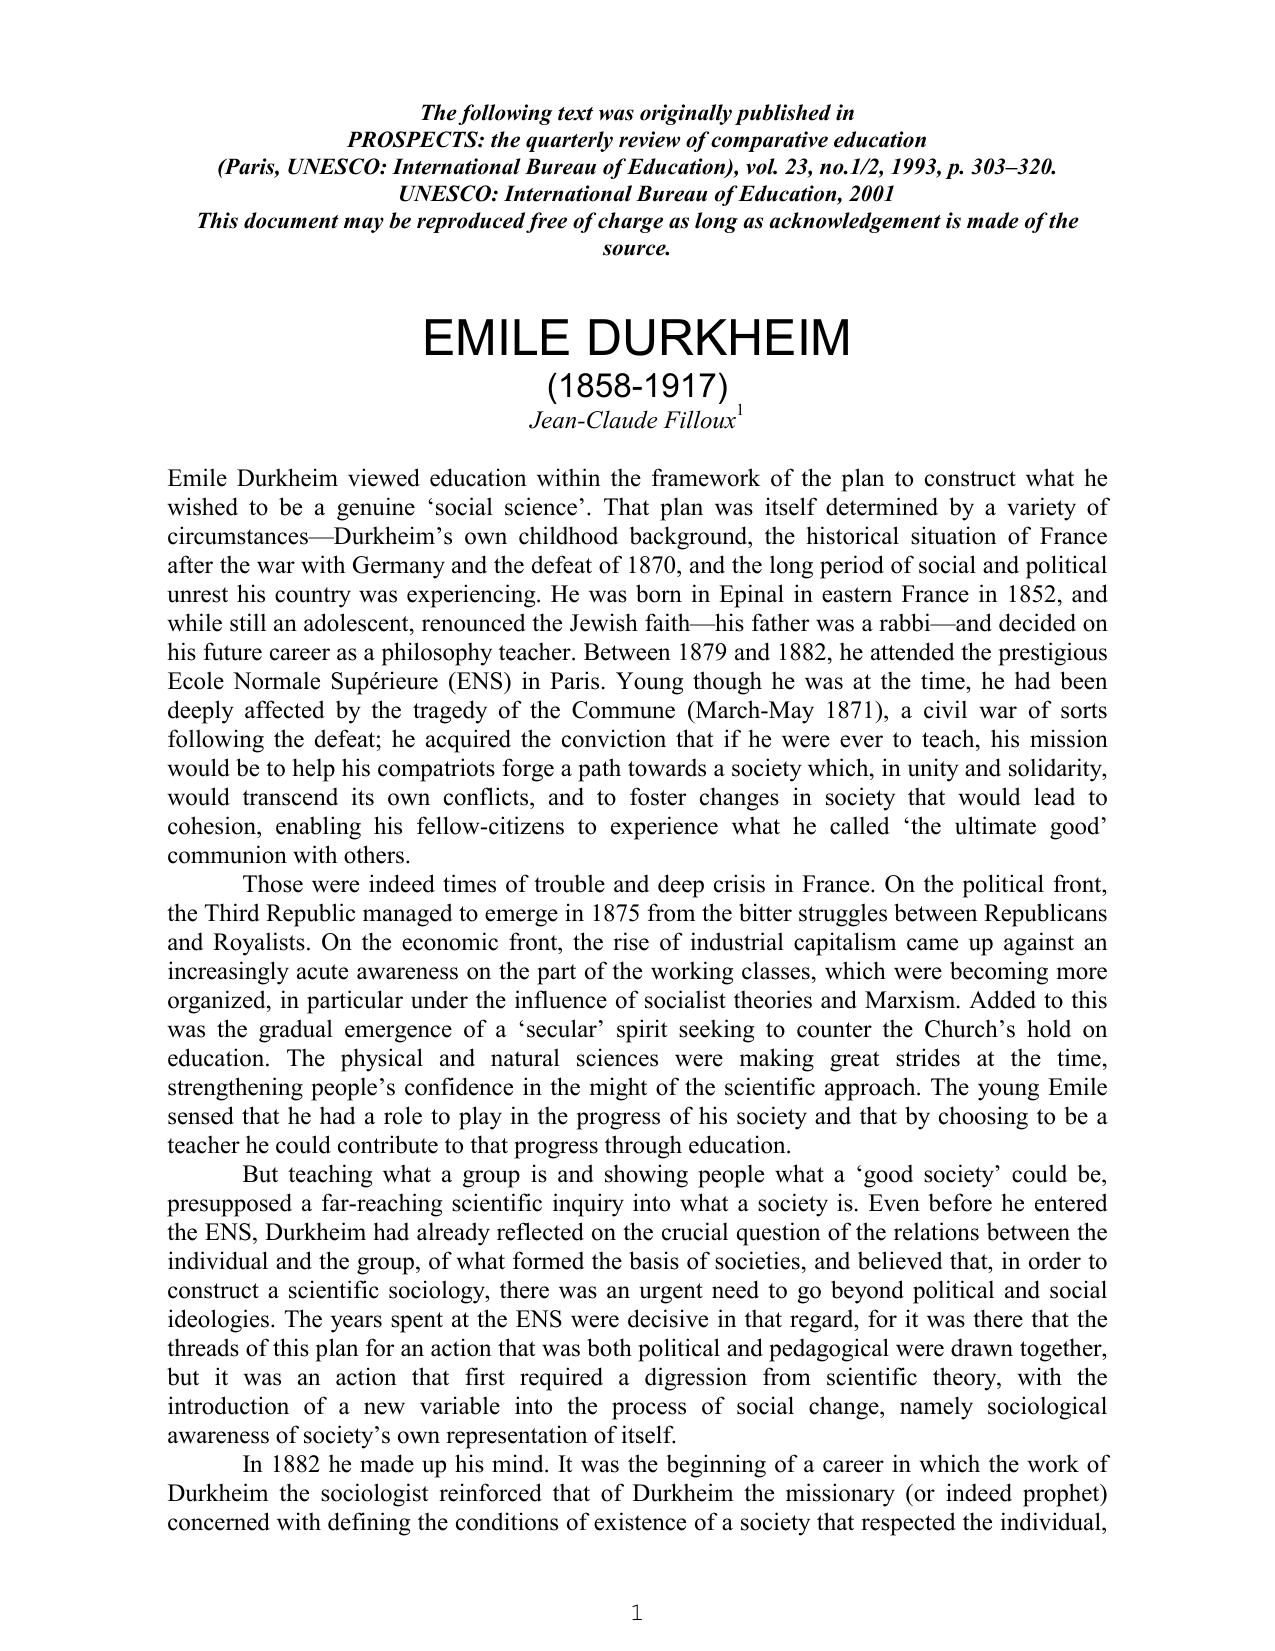 Jean- Claude Filloux Emile Durkheim